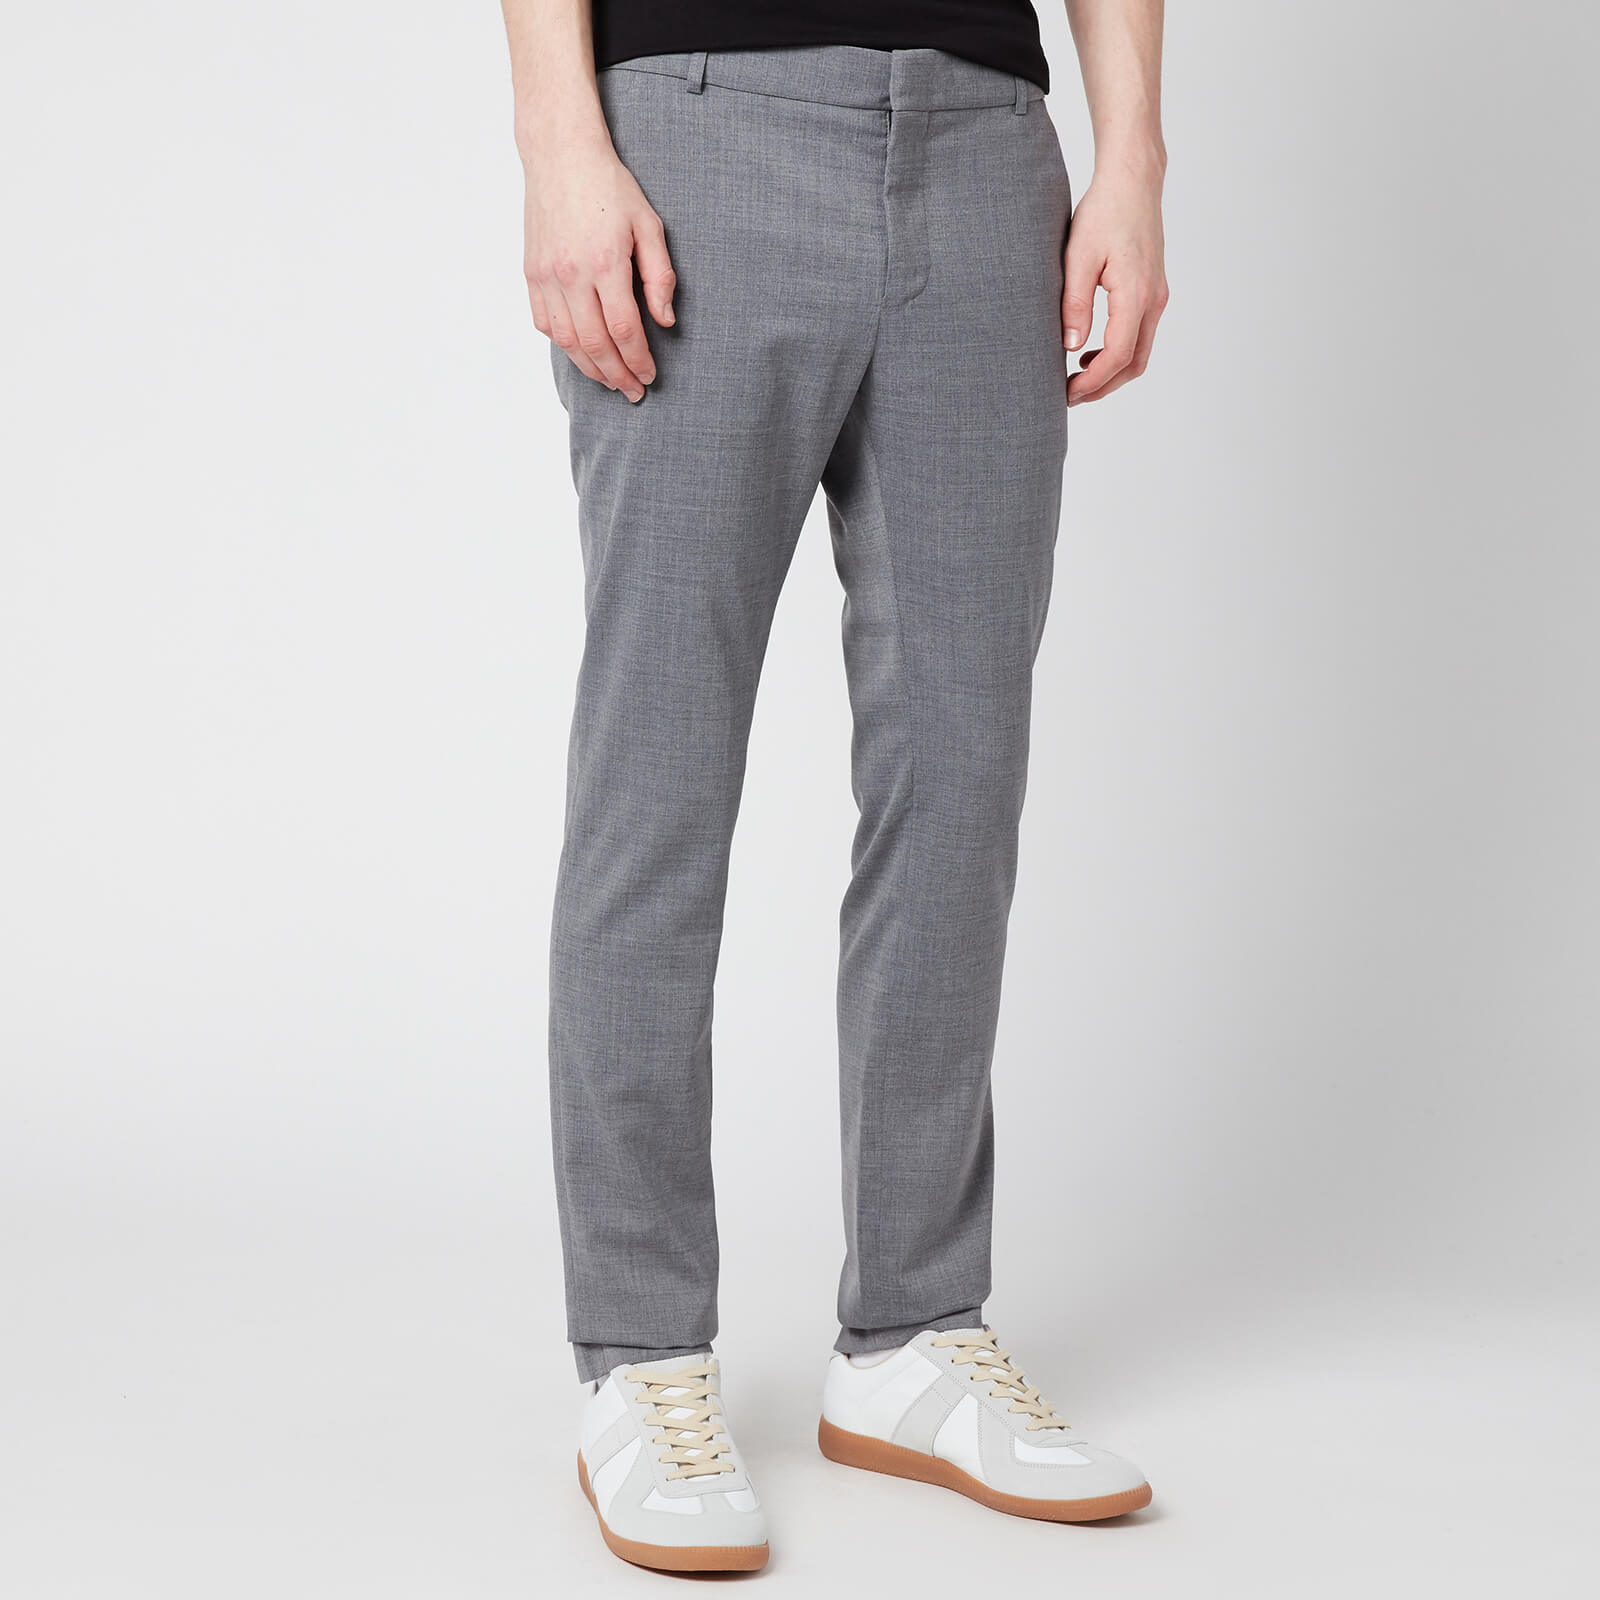 Balmain Men's Slim Wool Trousers - Grey - IT 50/L